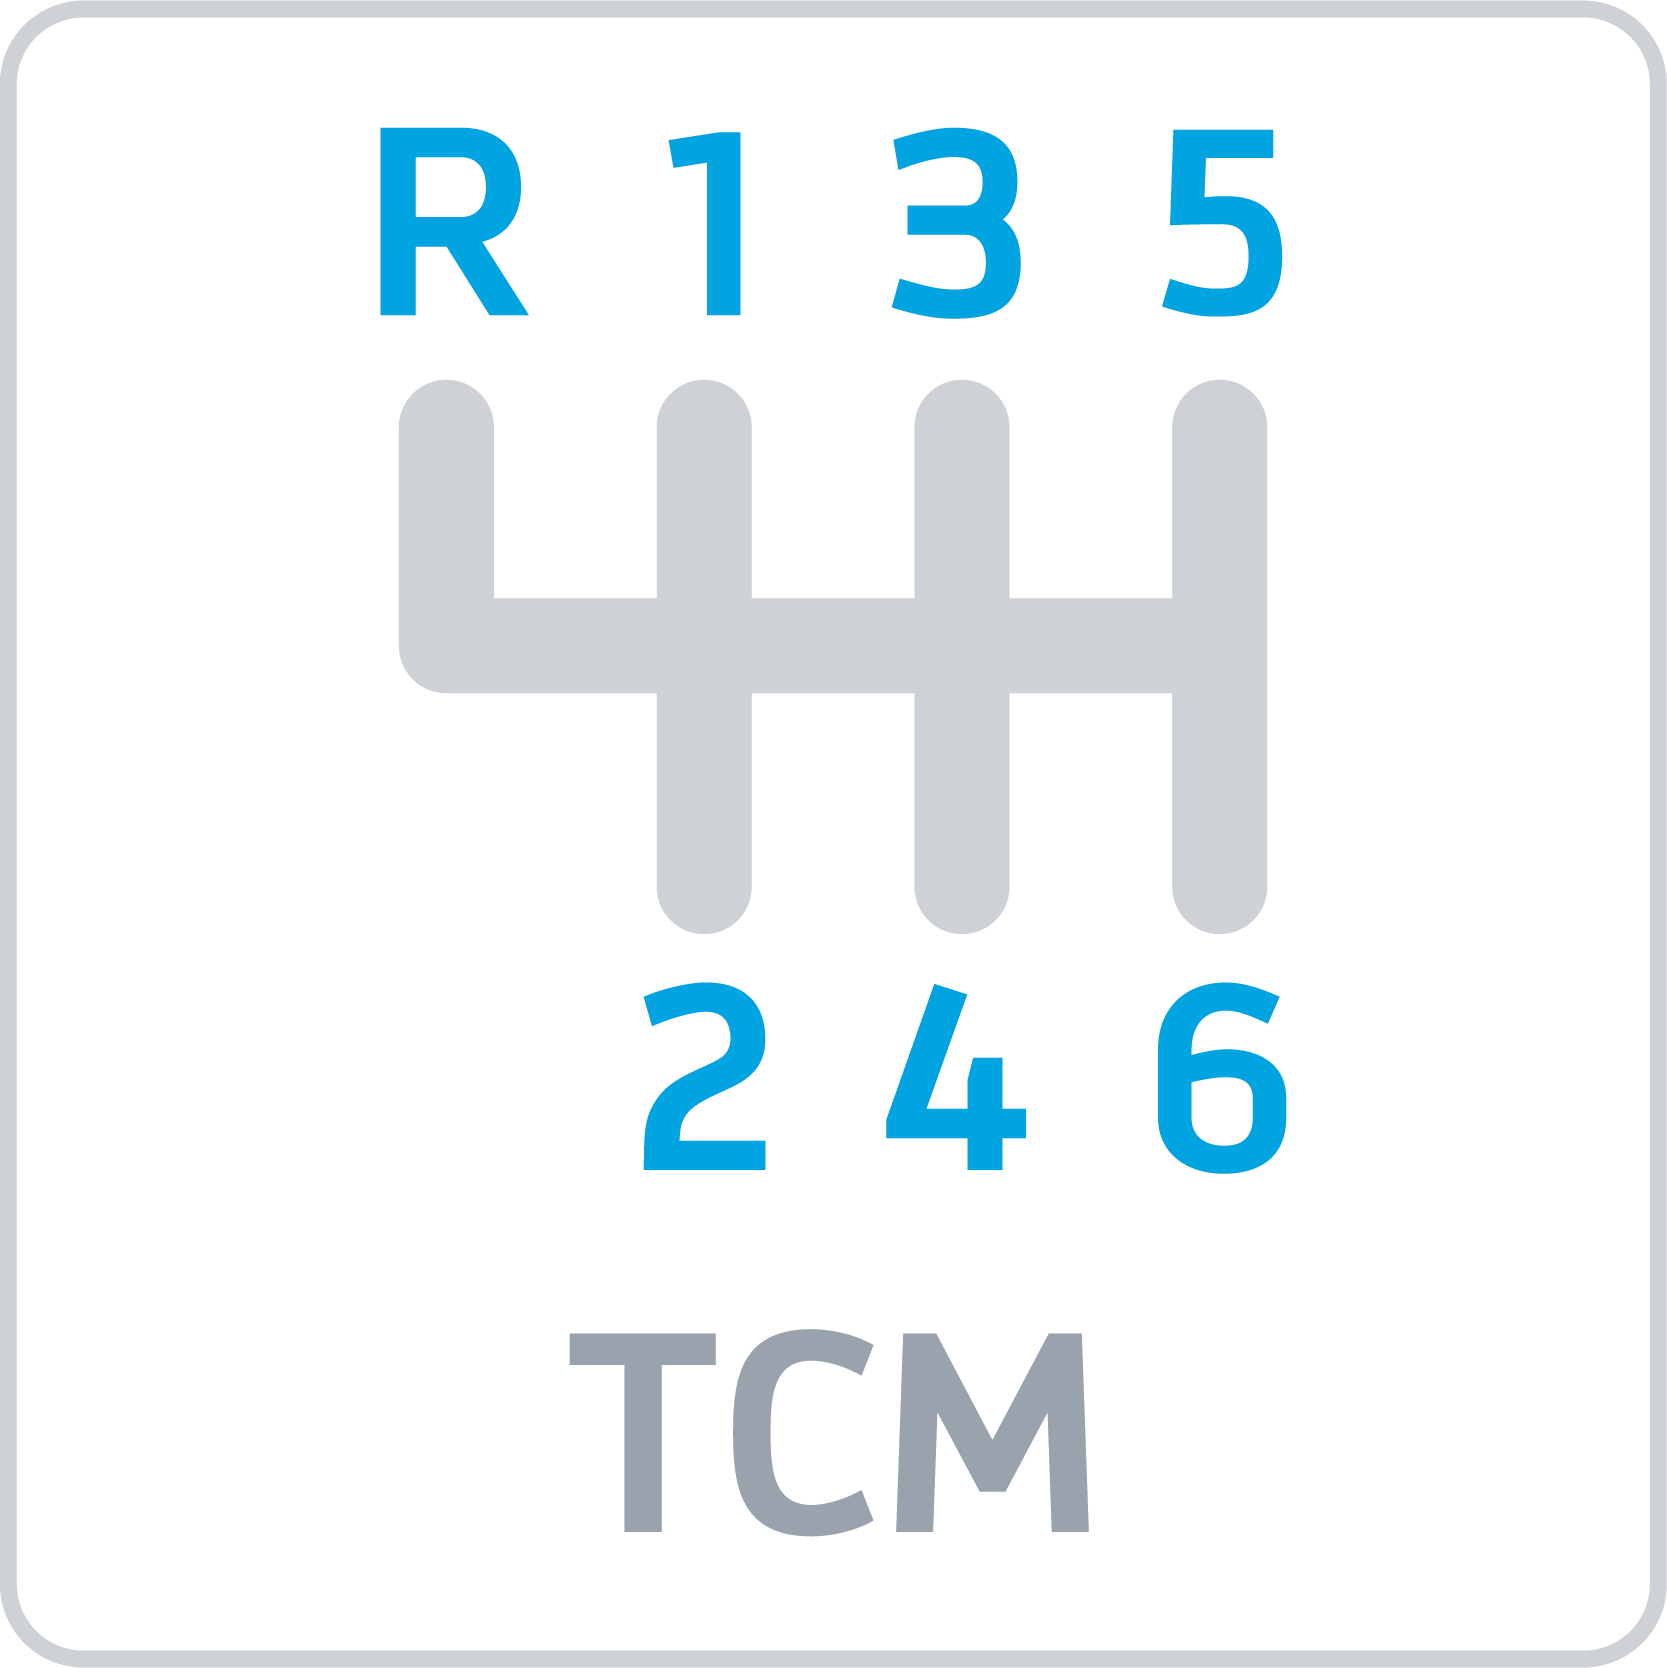 Chrysler Transmission Control Module (TCM)